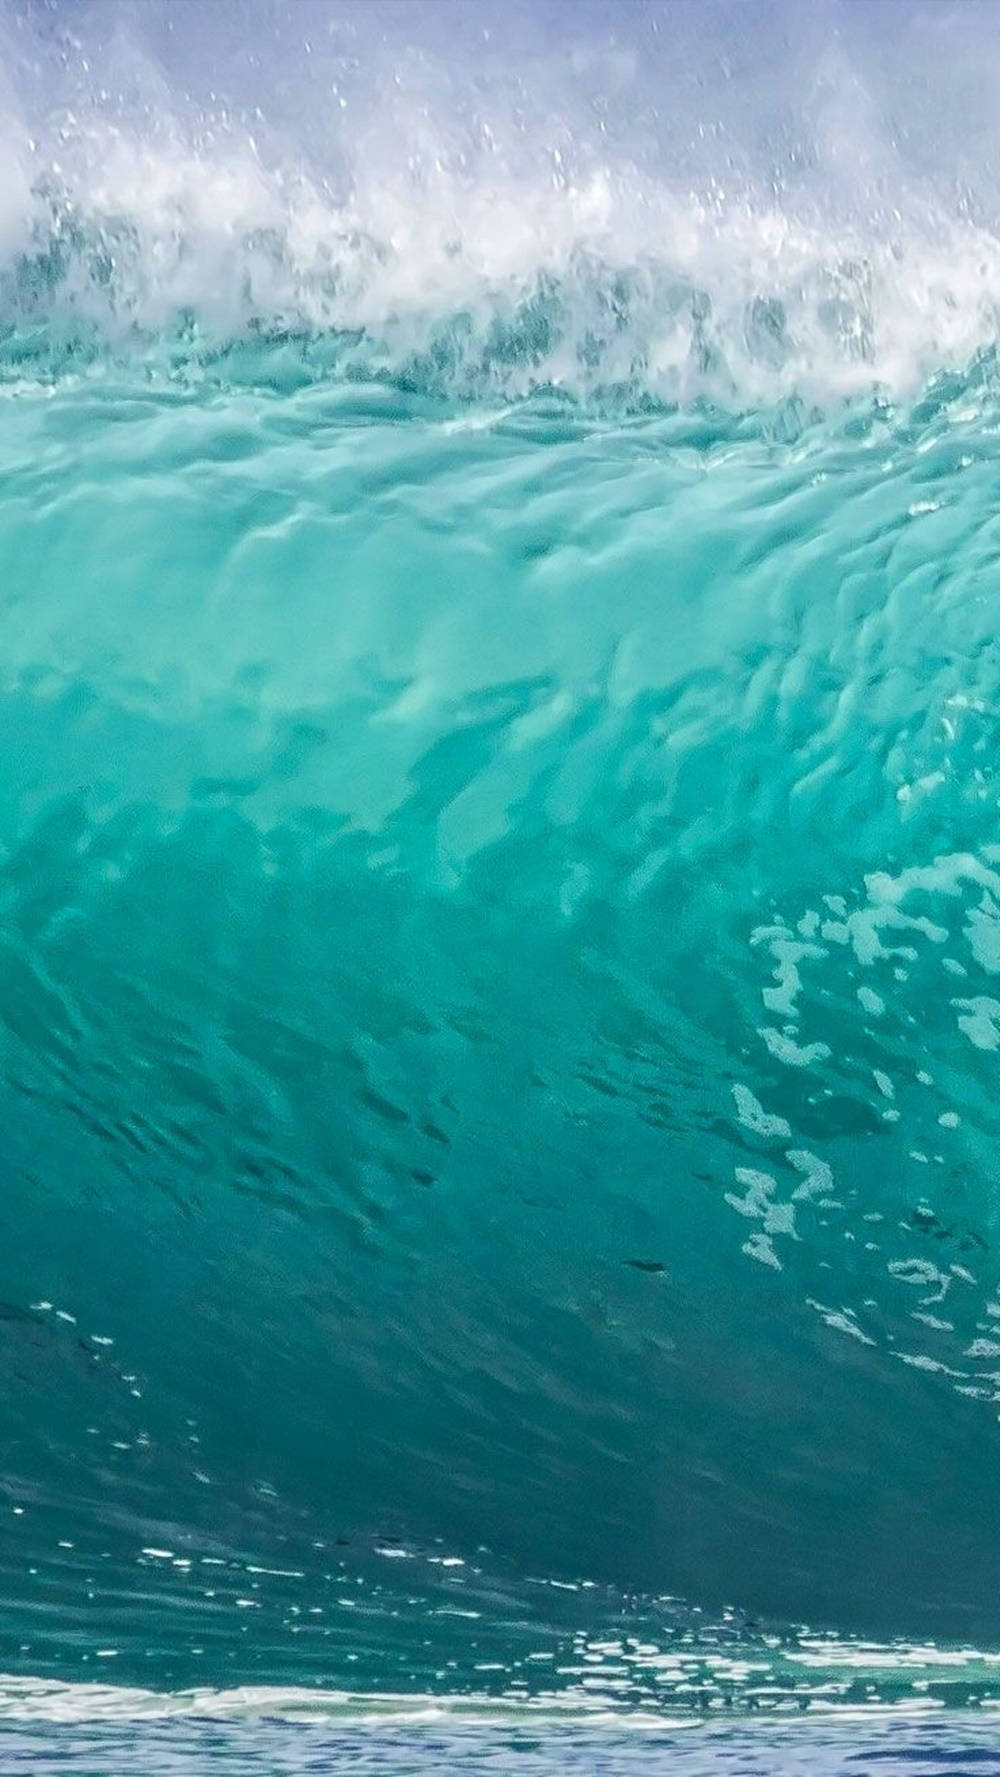 Unobstructed View - An Incredible Beachside Ocean Iphone Wallpaper